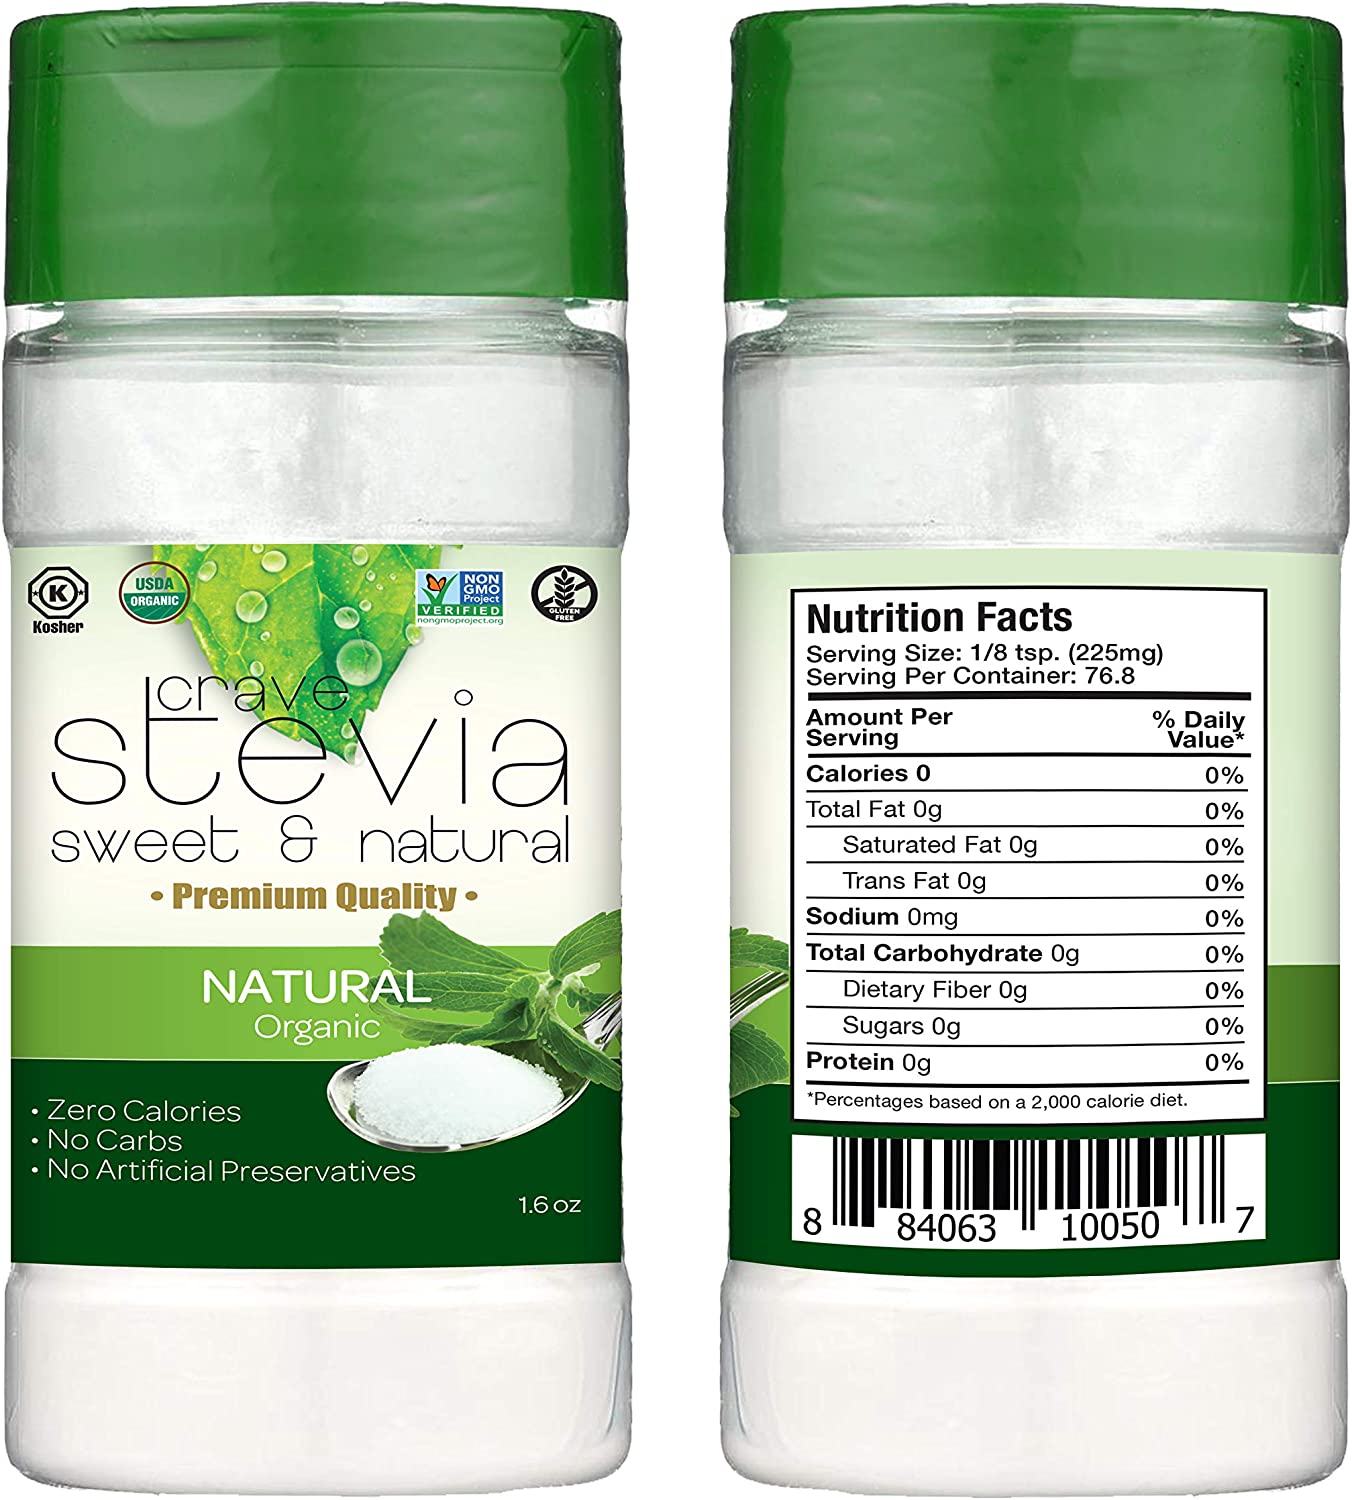 Crave Stevia, Powder Bottle, 45 g